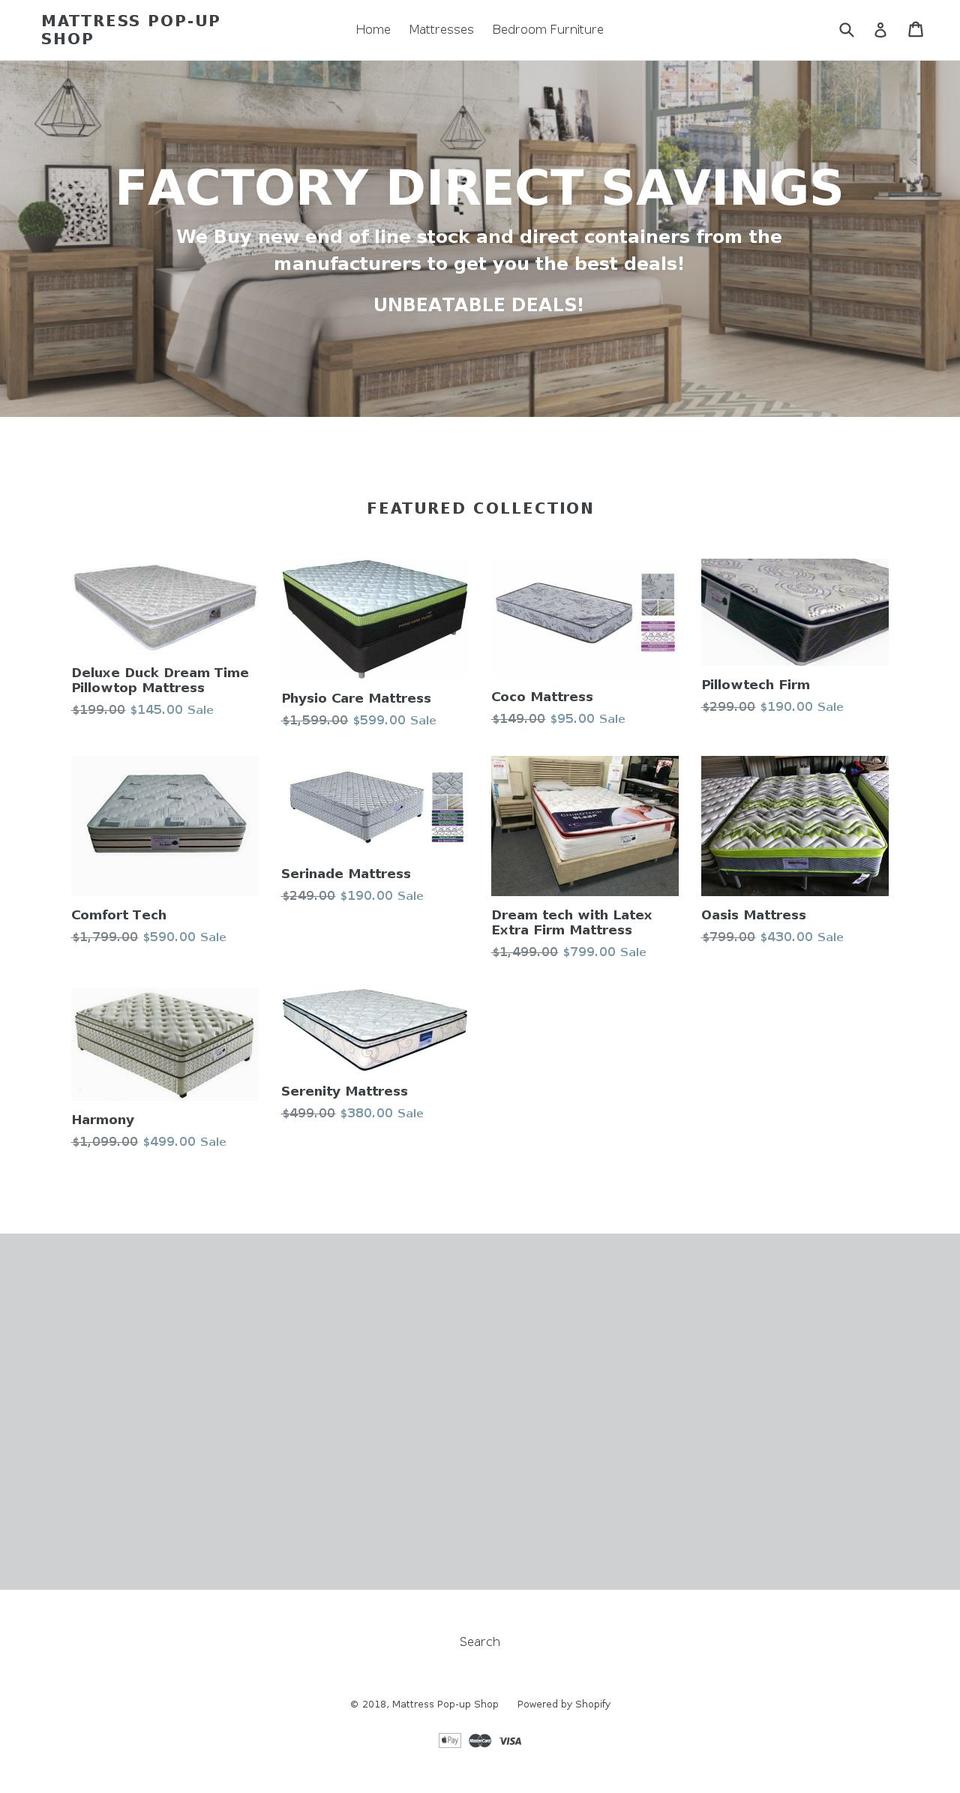 mattresses.bargains shopify website screenshot